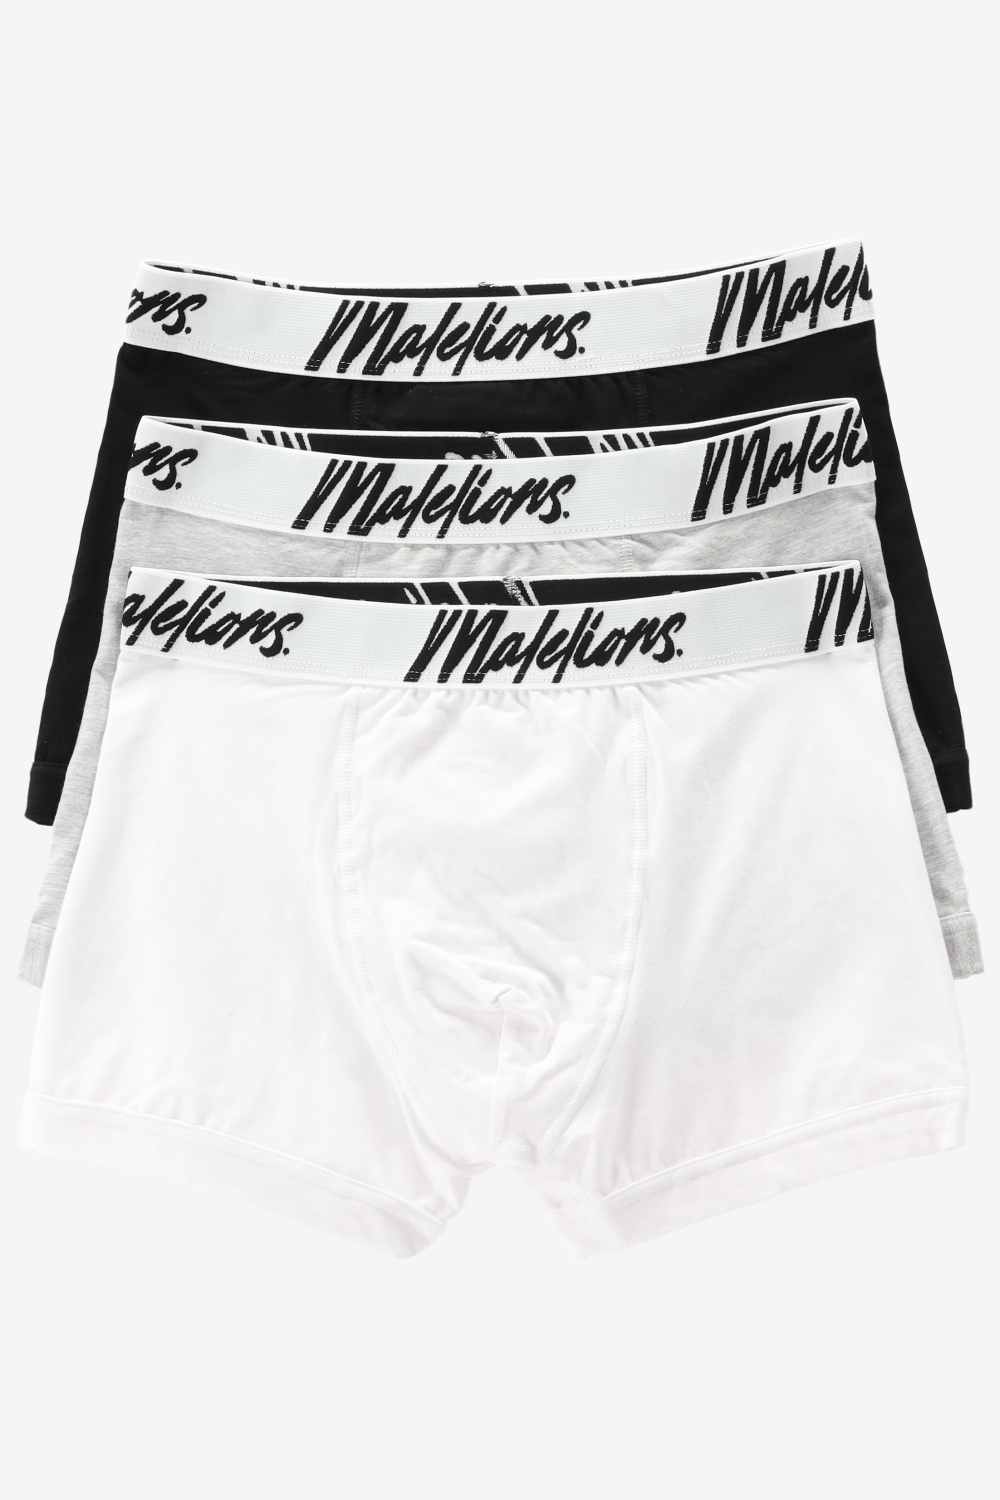 Malelions Underwear 